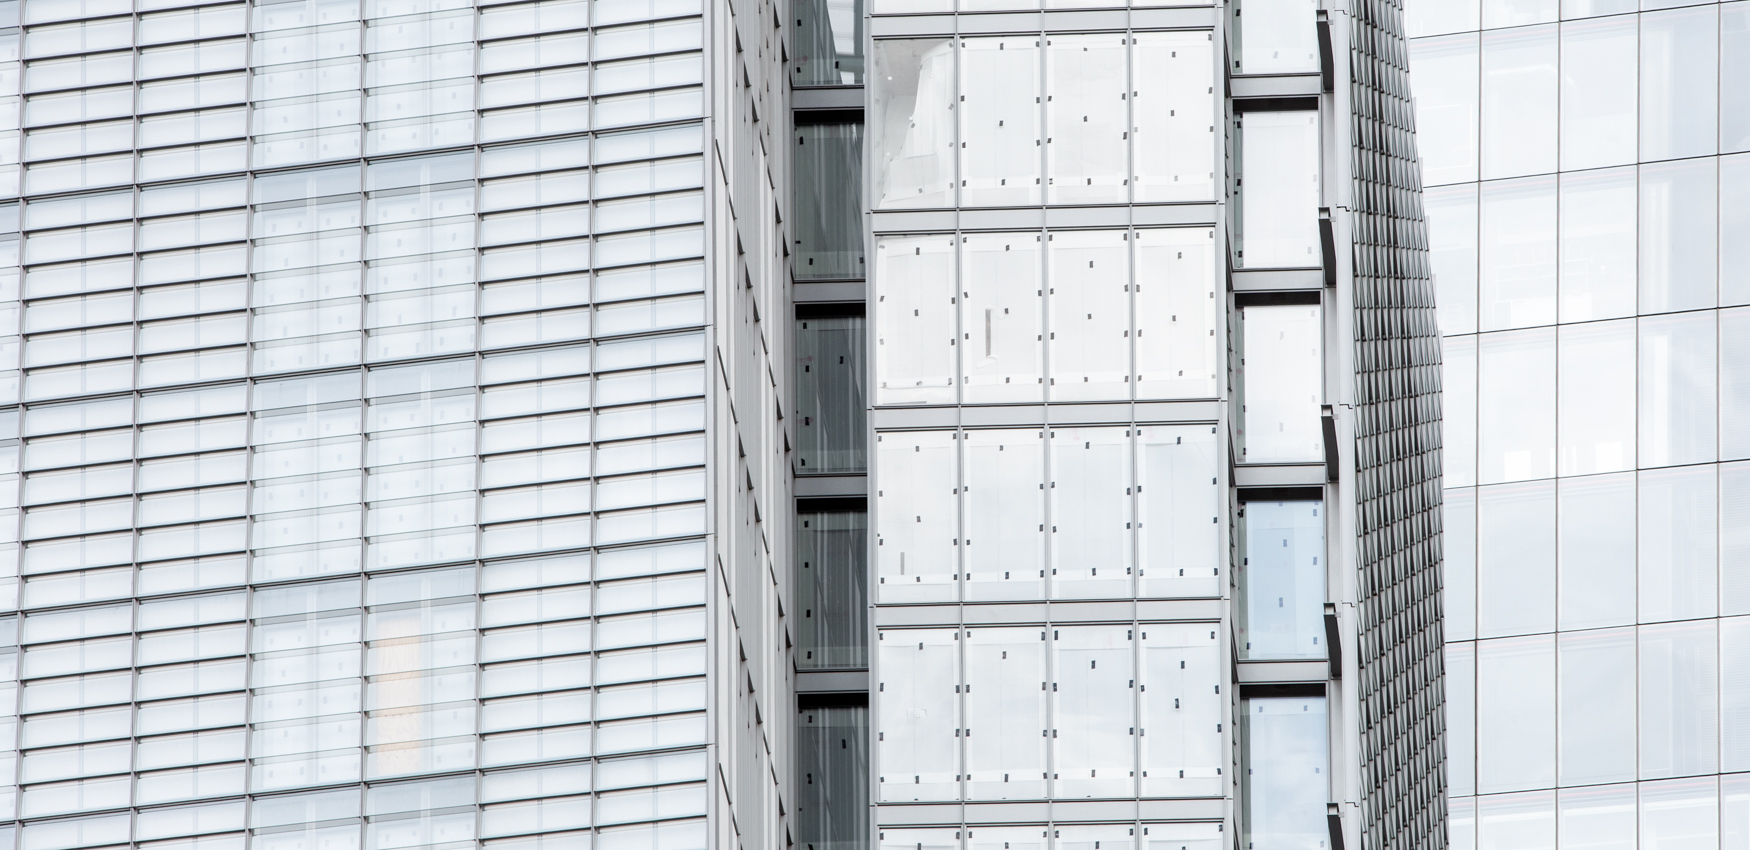 THE SHARD, LONDON Renzo Piano